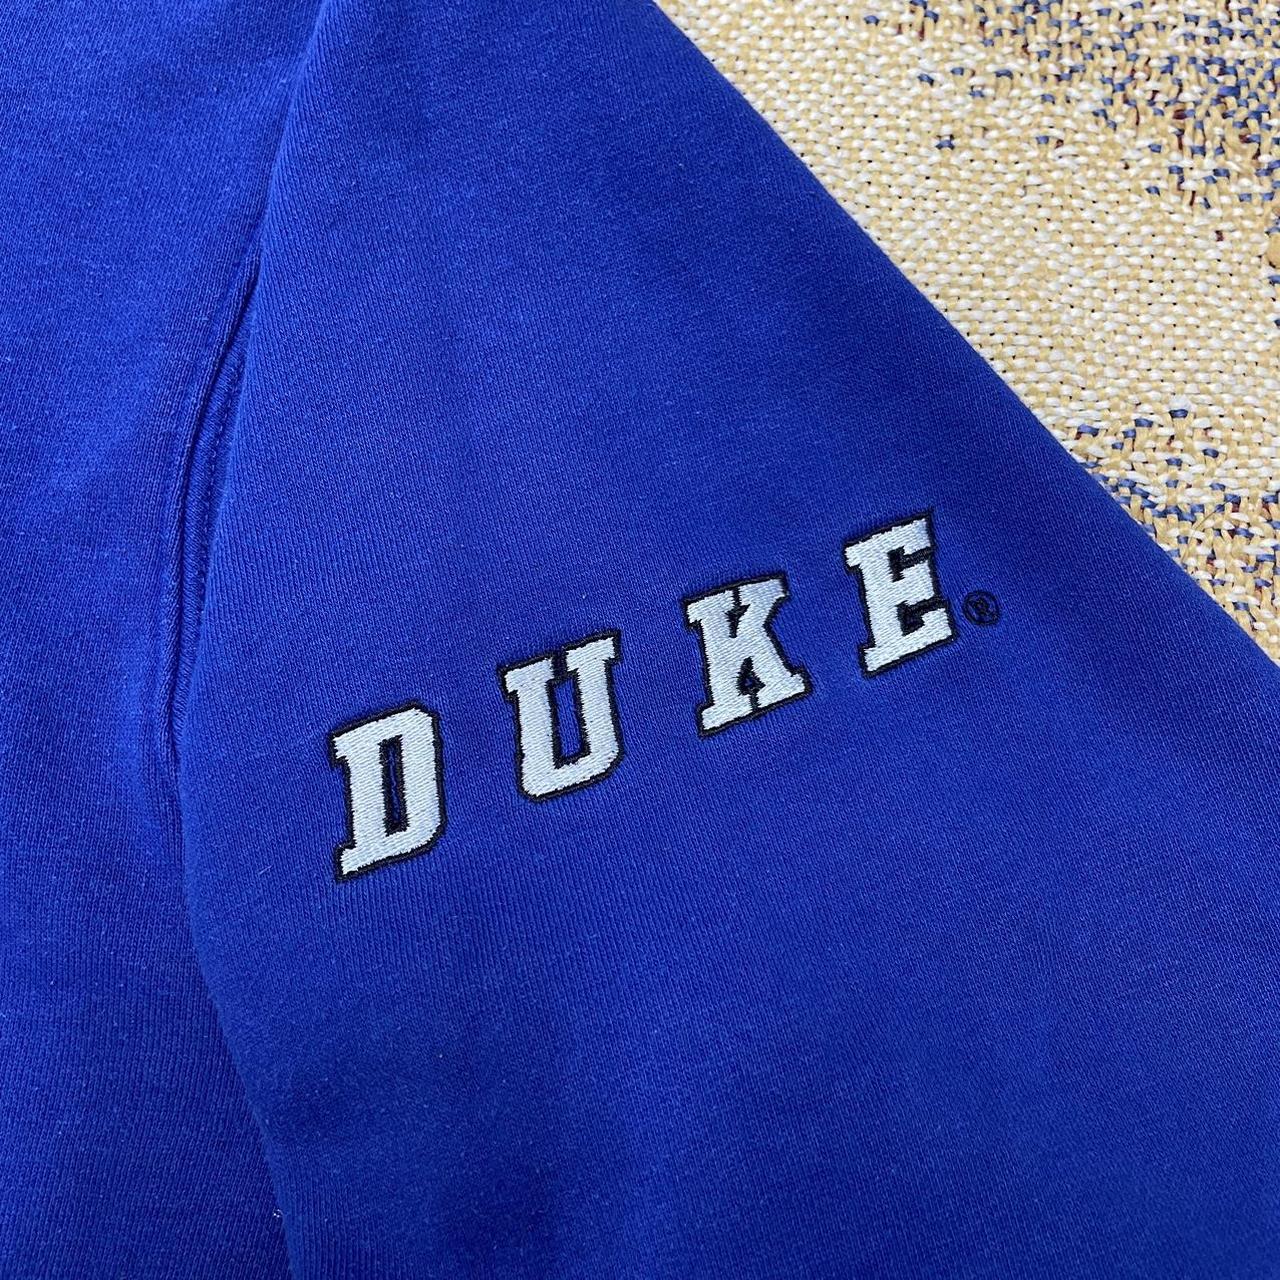 Duke Men's Blue and White Hoodie (4)